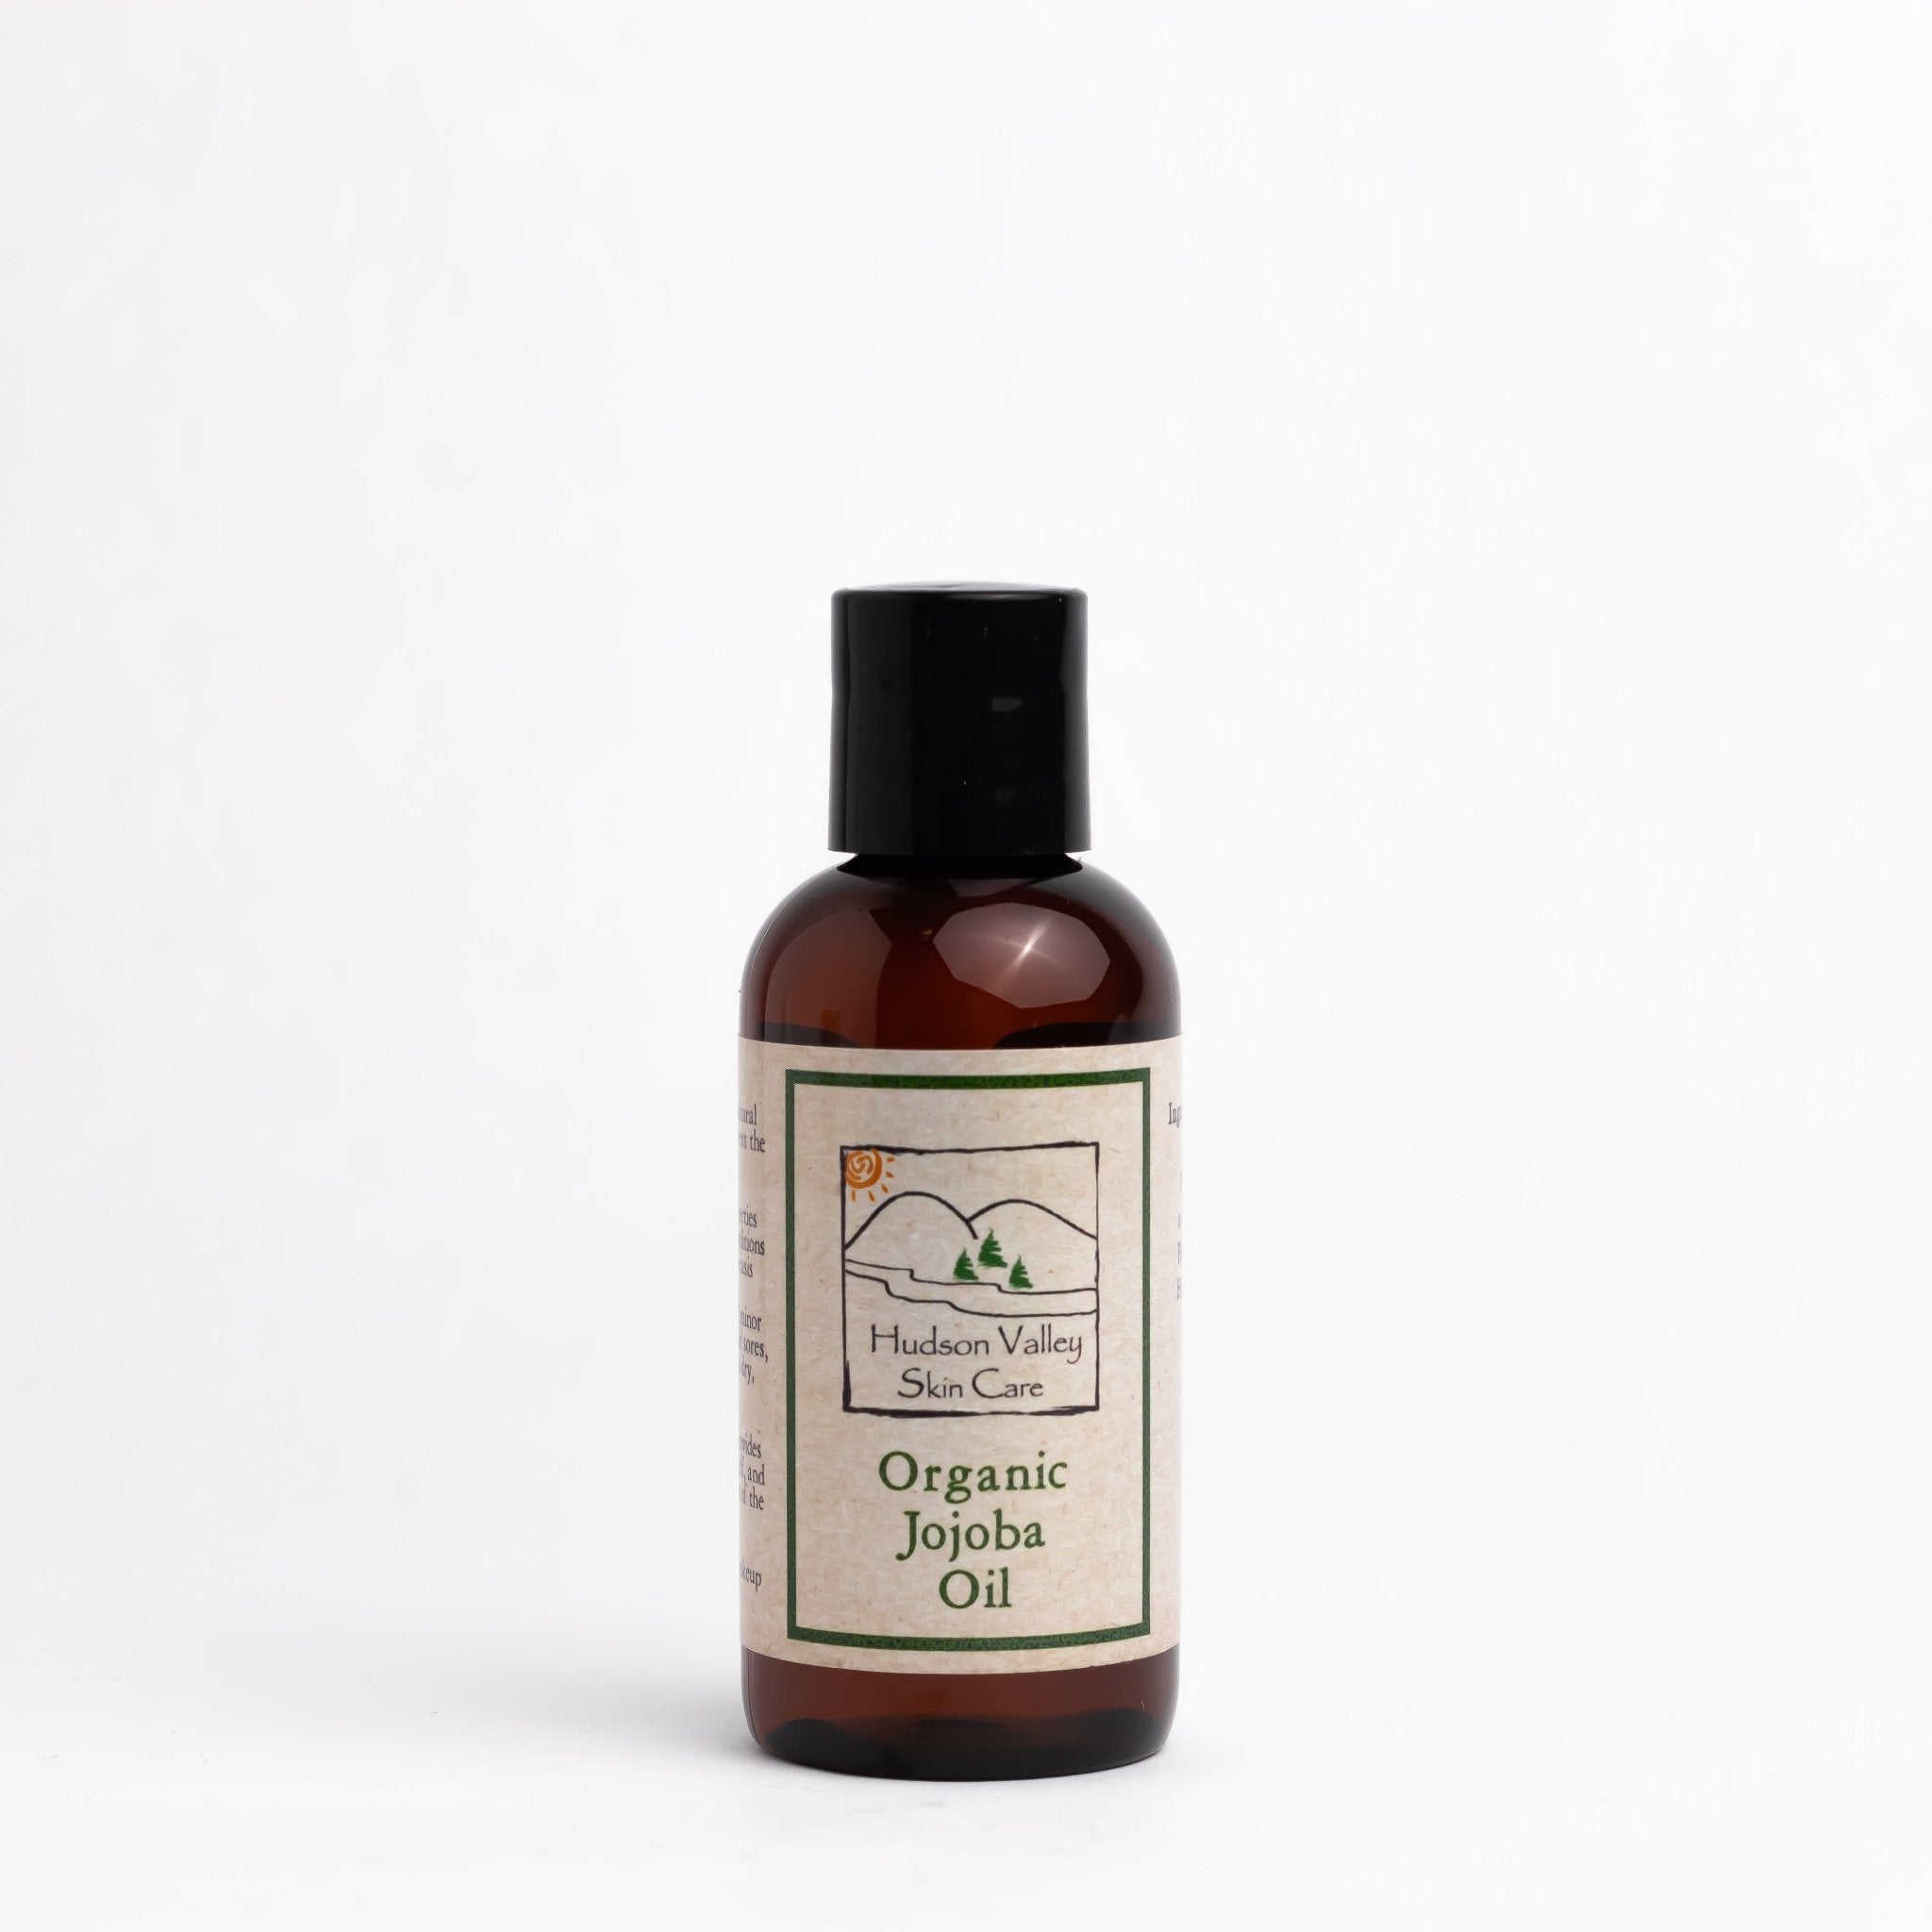 Organic Jojoba Oil - Hudson Valley Skin Care